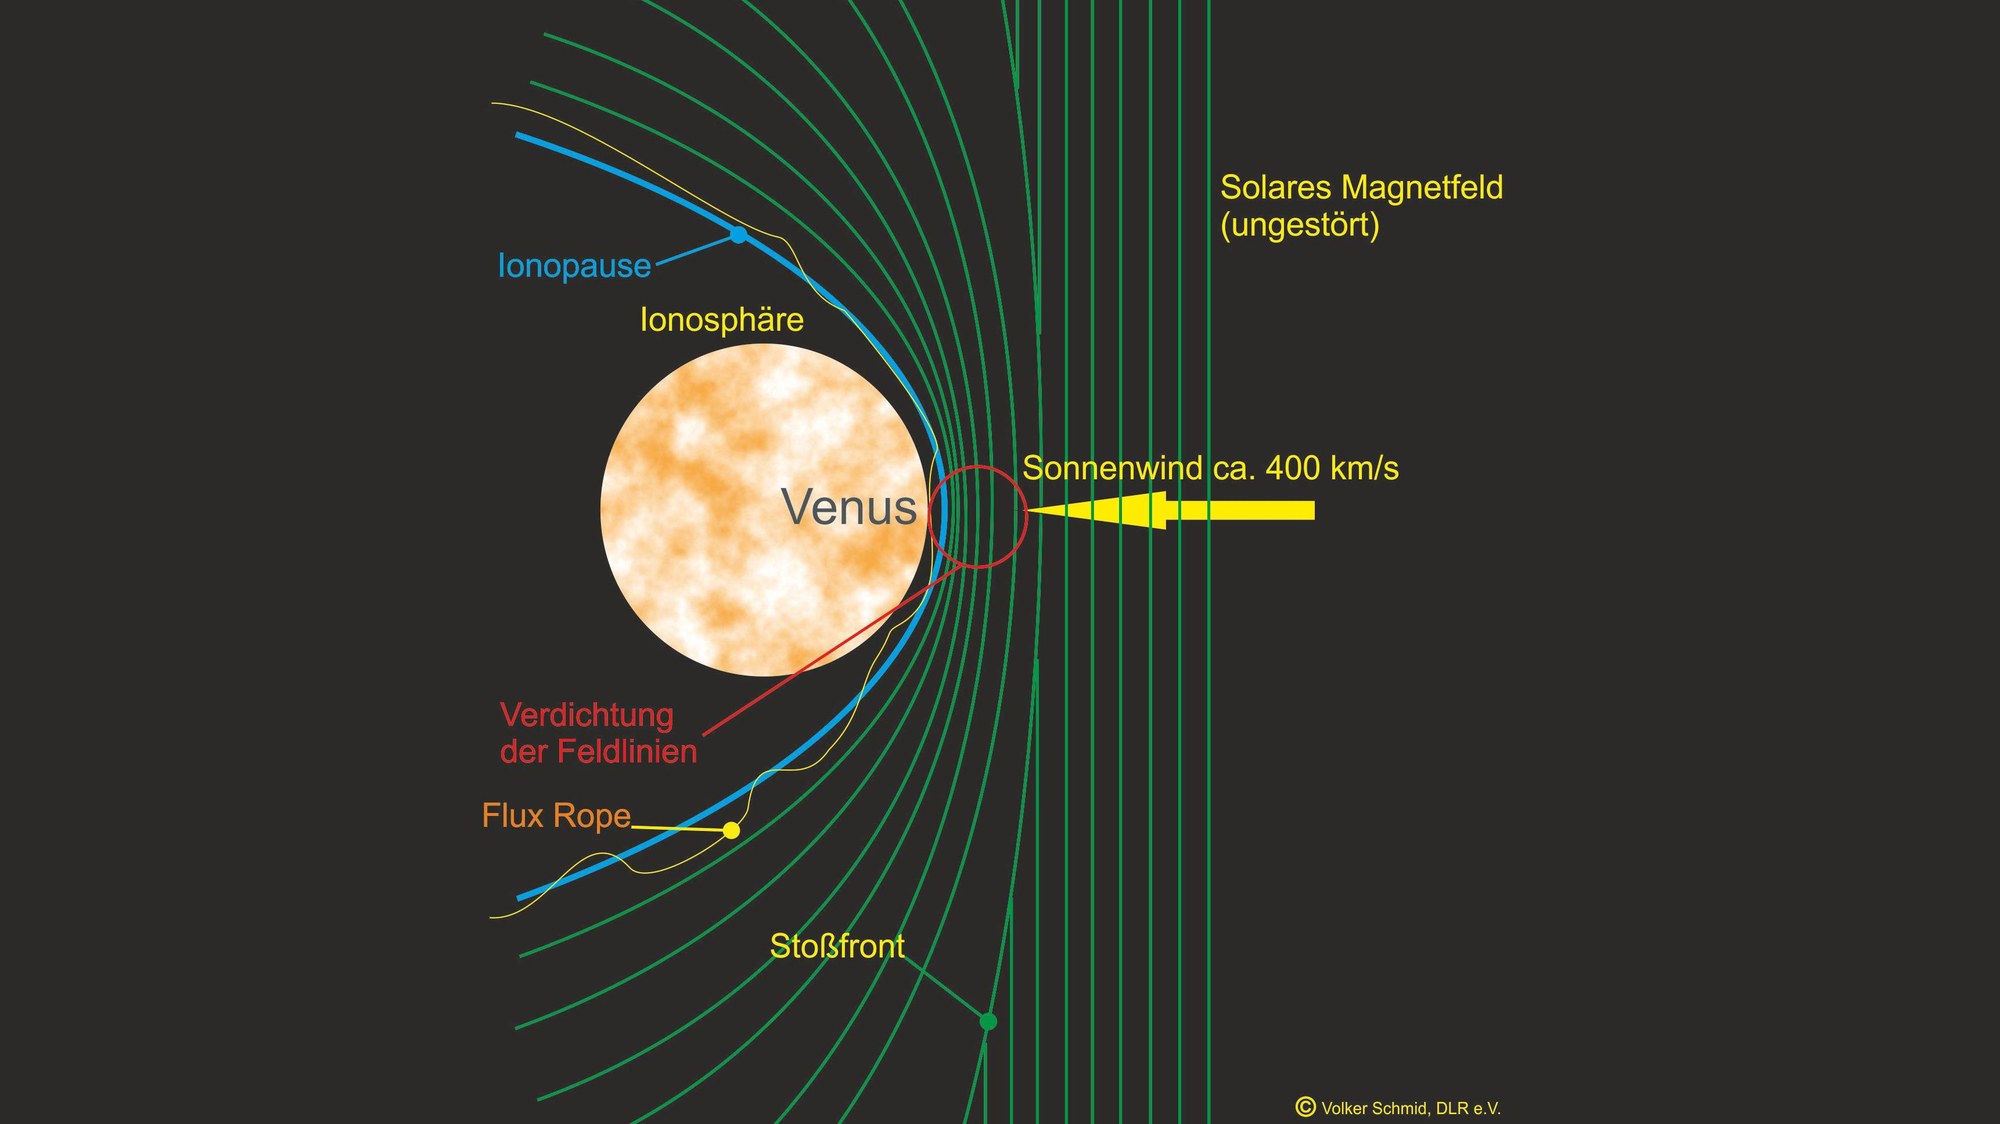 The ionosphere of Venus in the solar wind